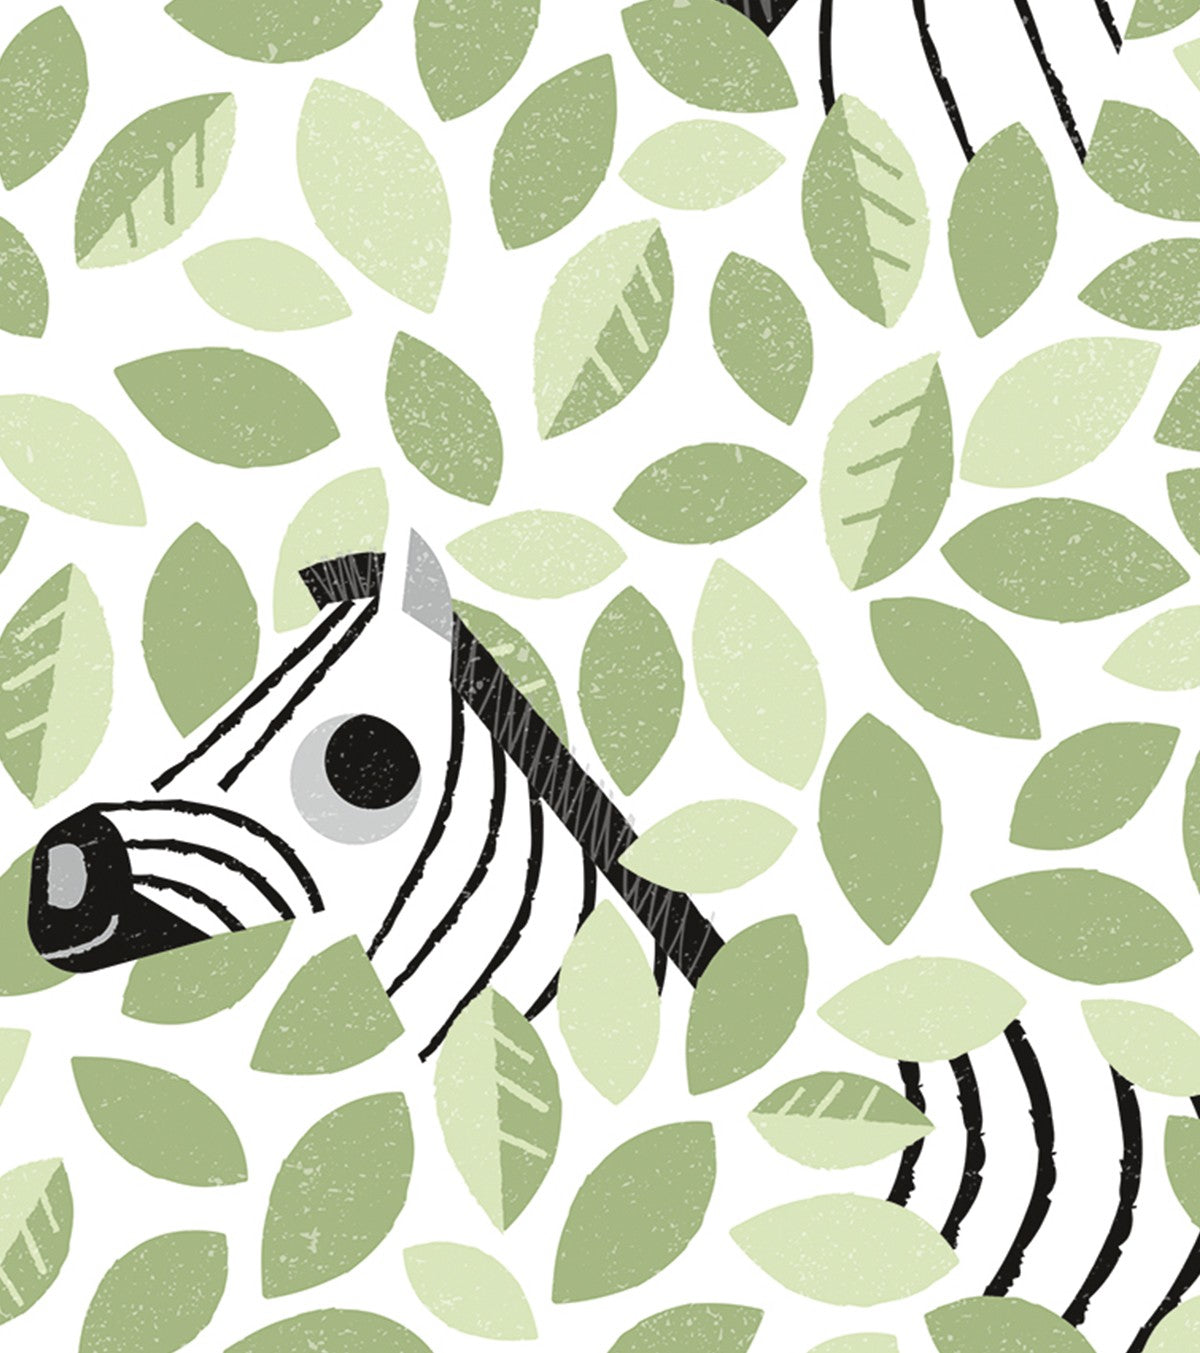 HIDE & SEEK - Children's poster - Zebra and leaves